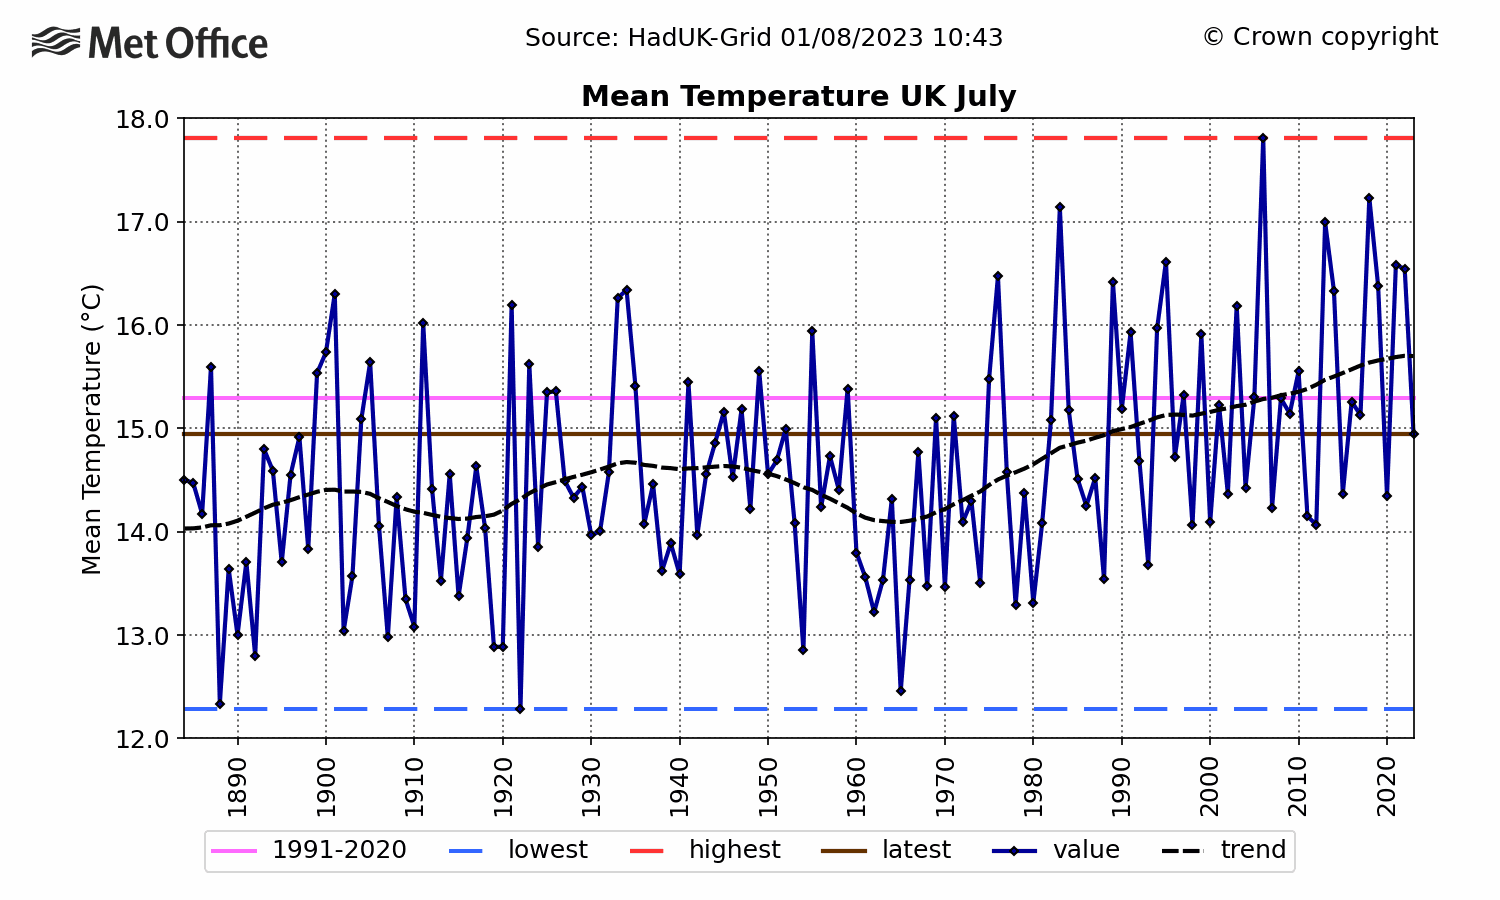 UK Mean temperature - July